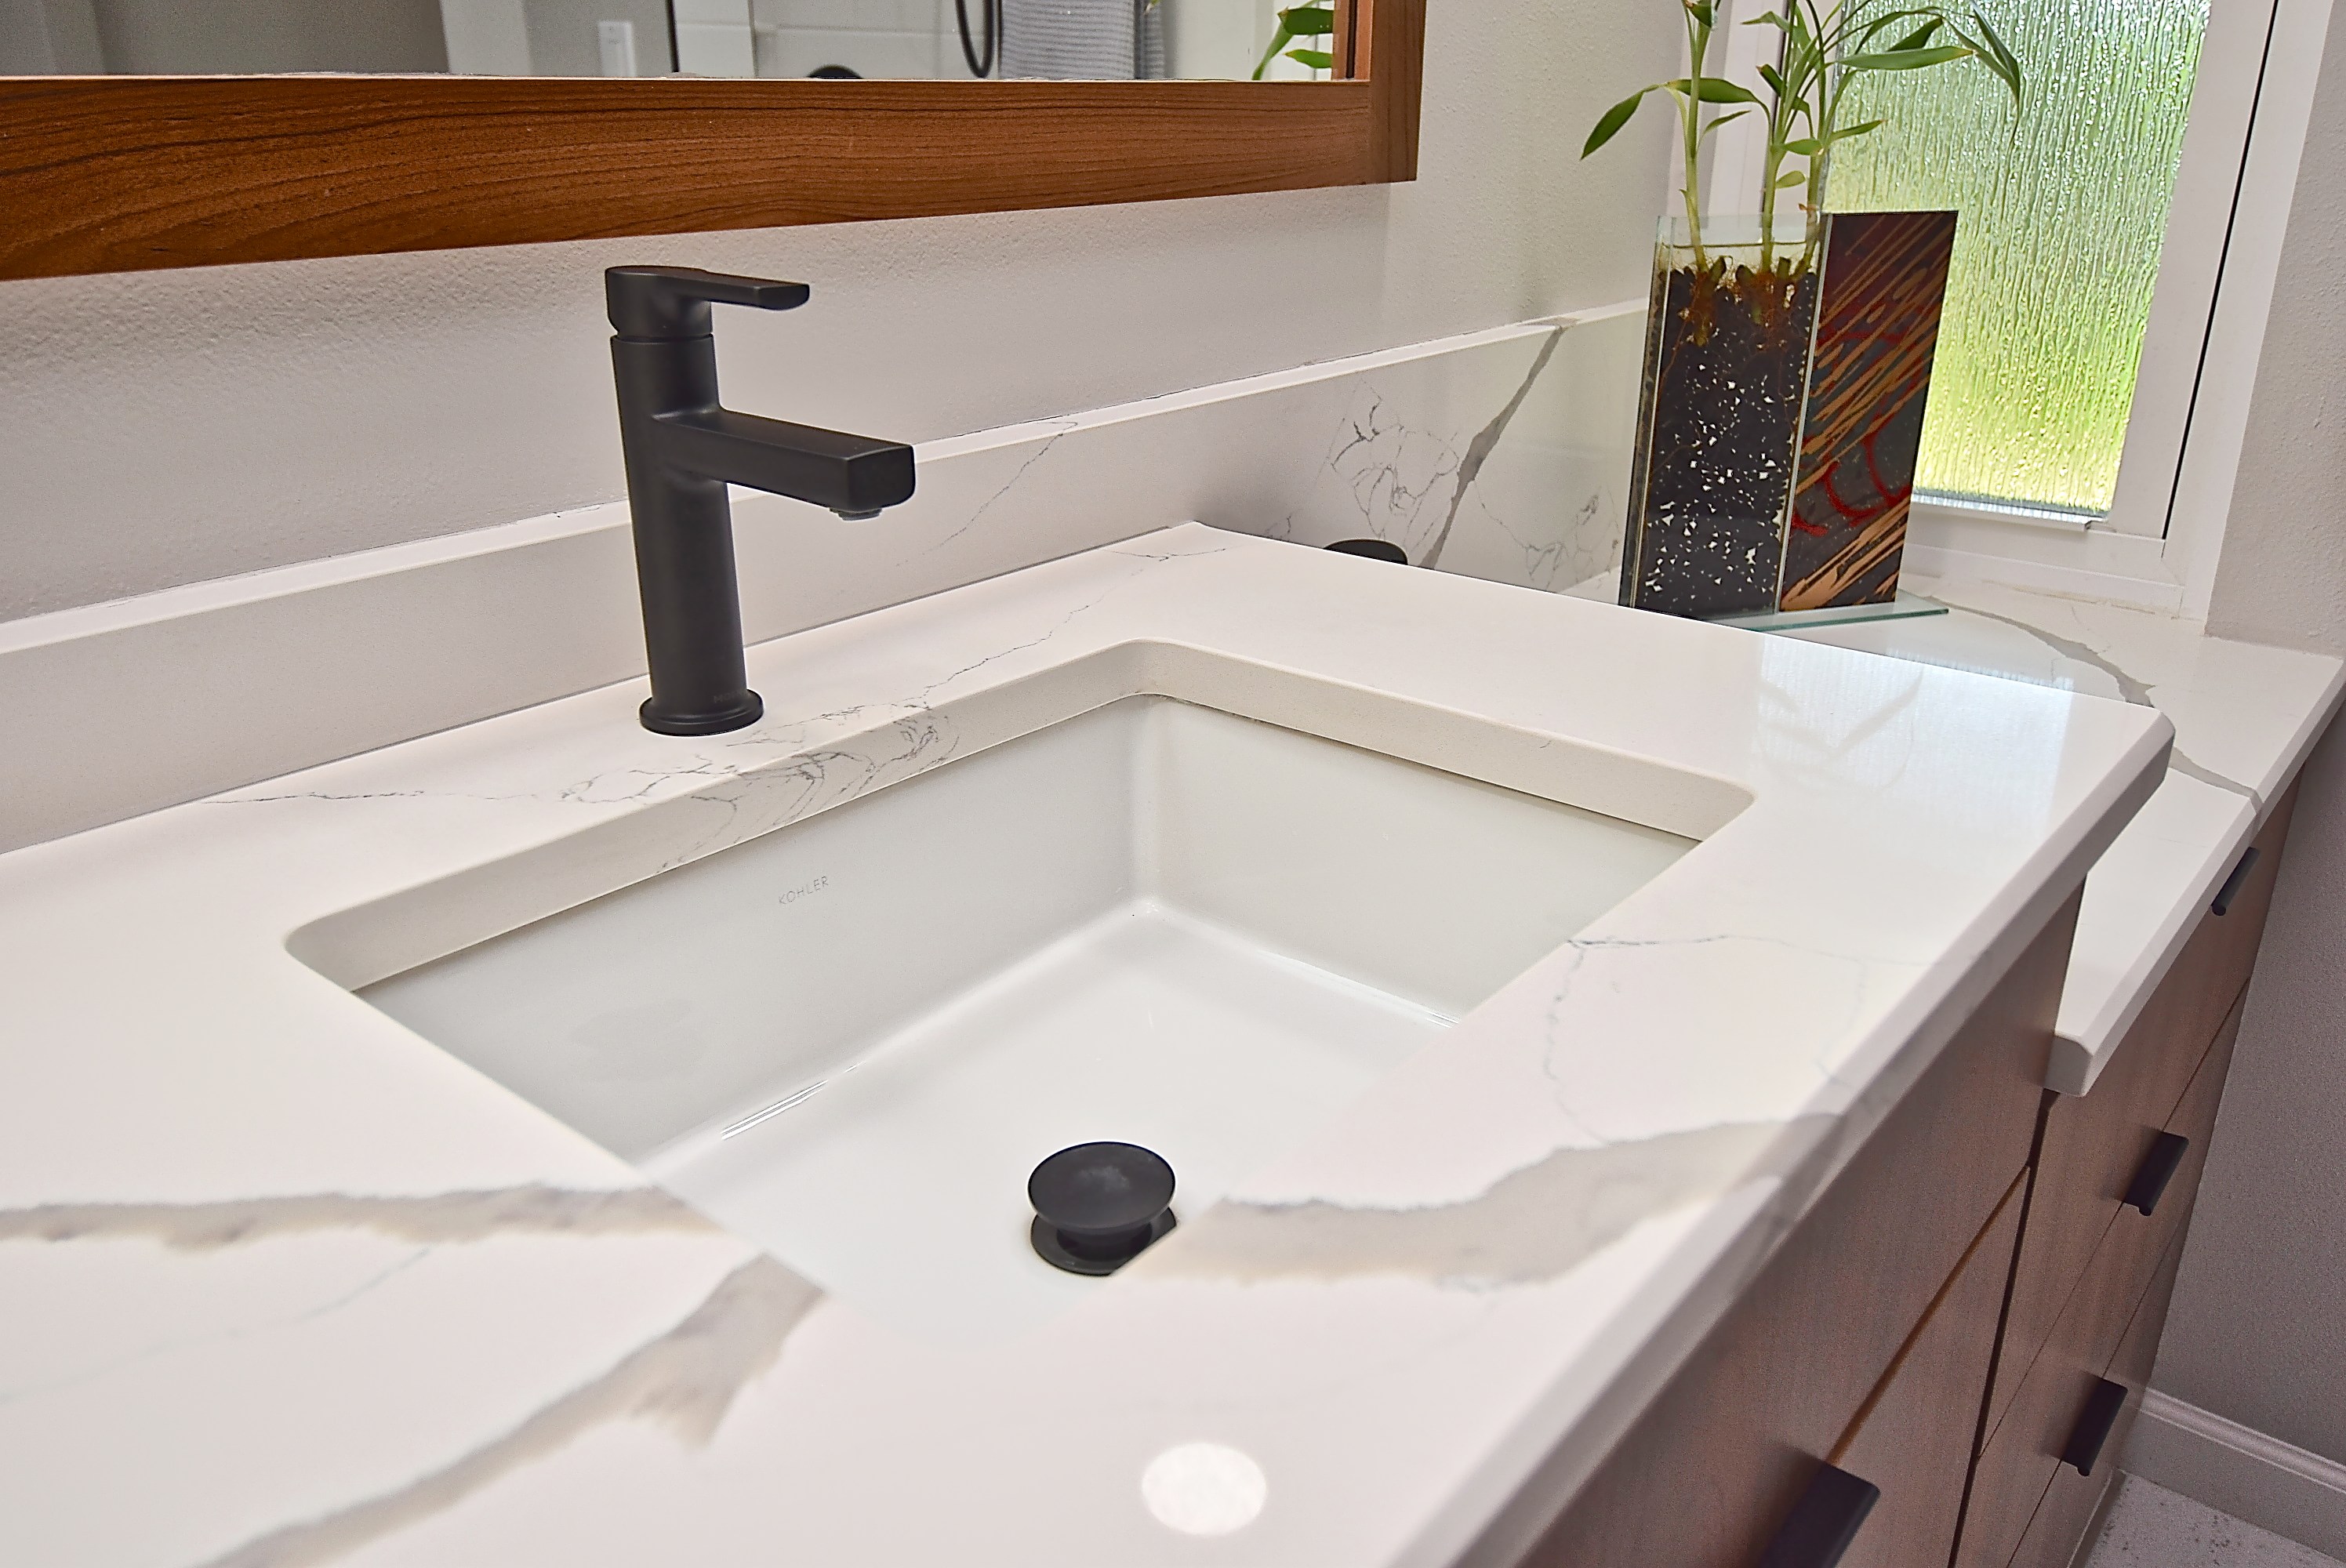 Undermount Sink with Modern Mate Black Fixtures in Modern Sarasota Bathroom Remodel